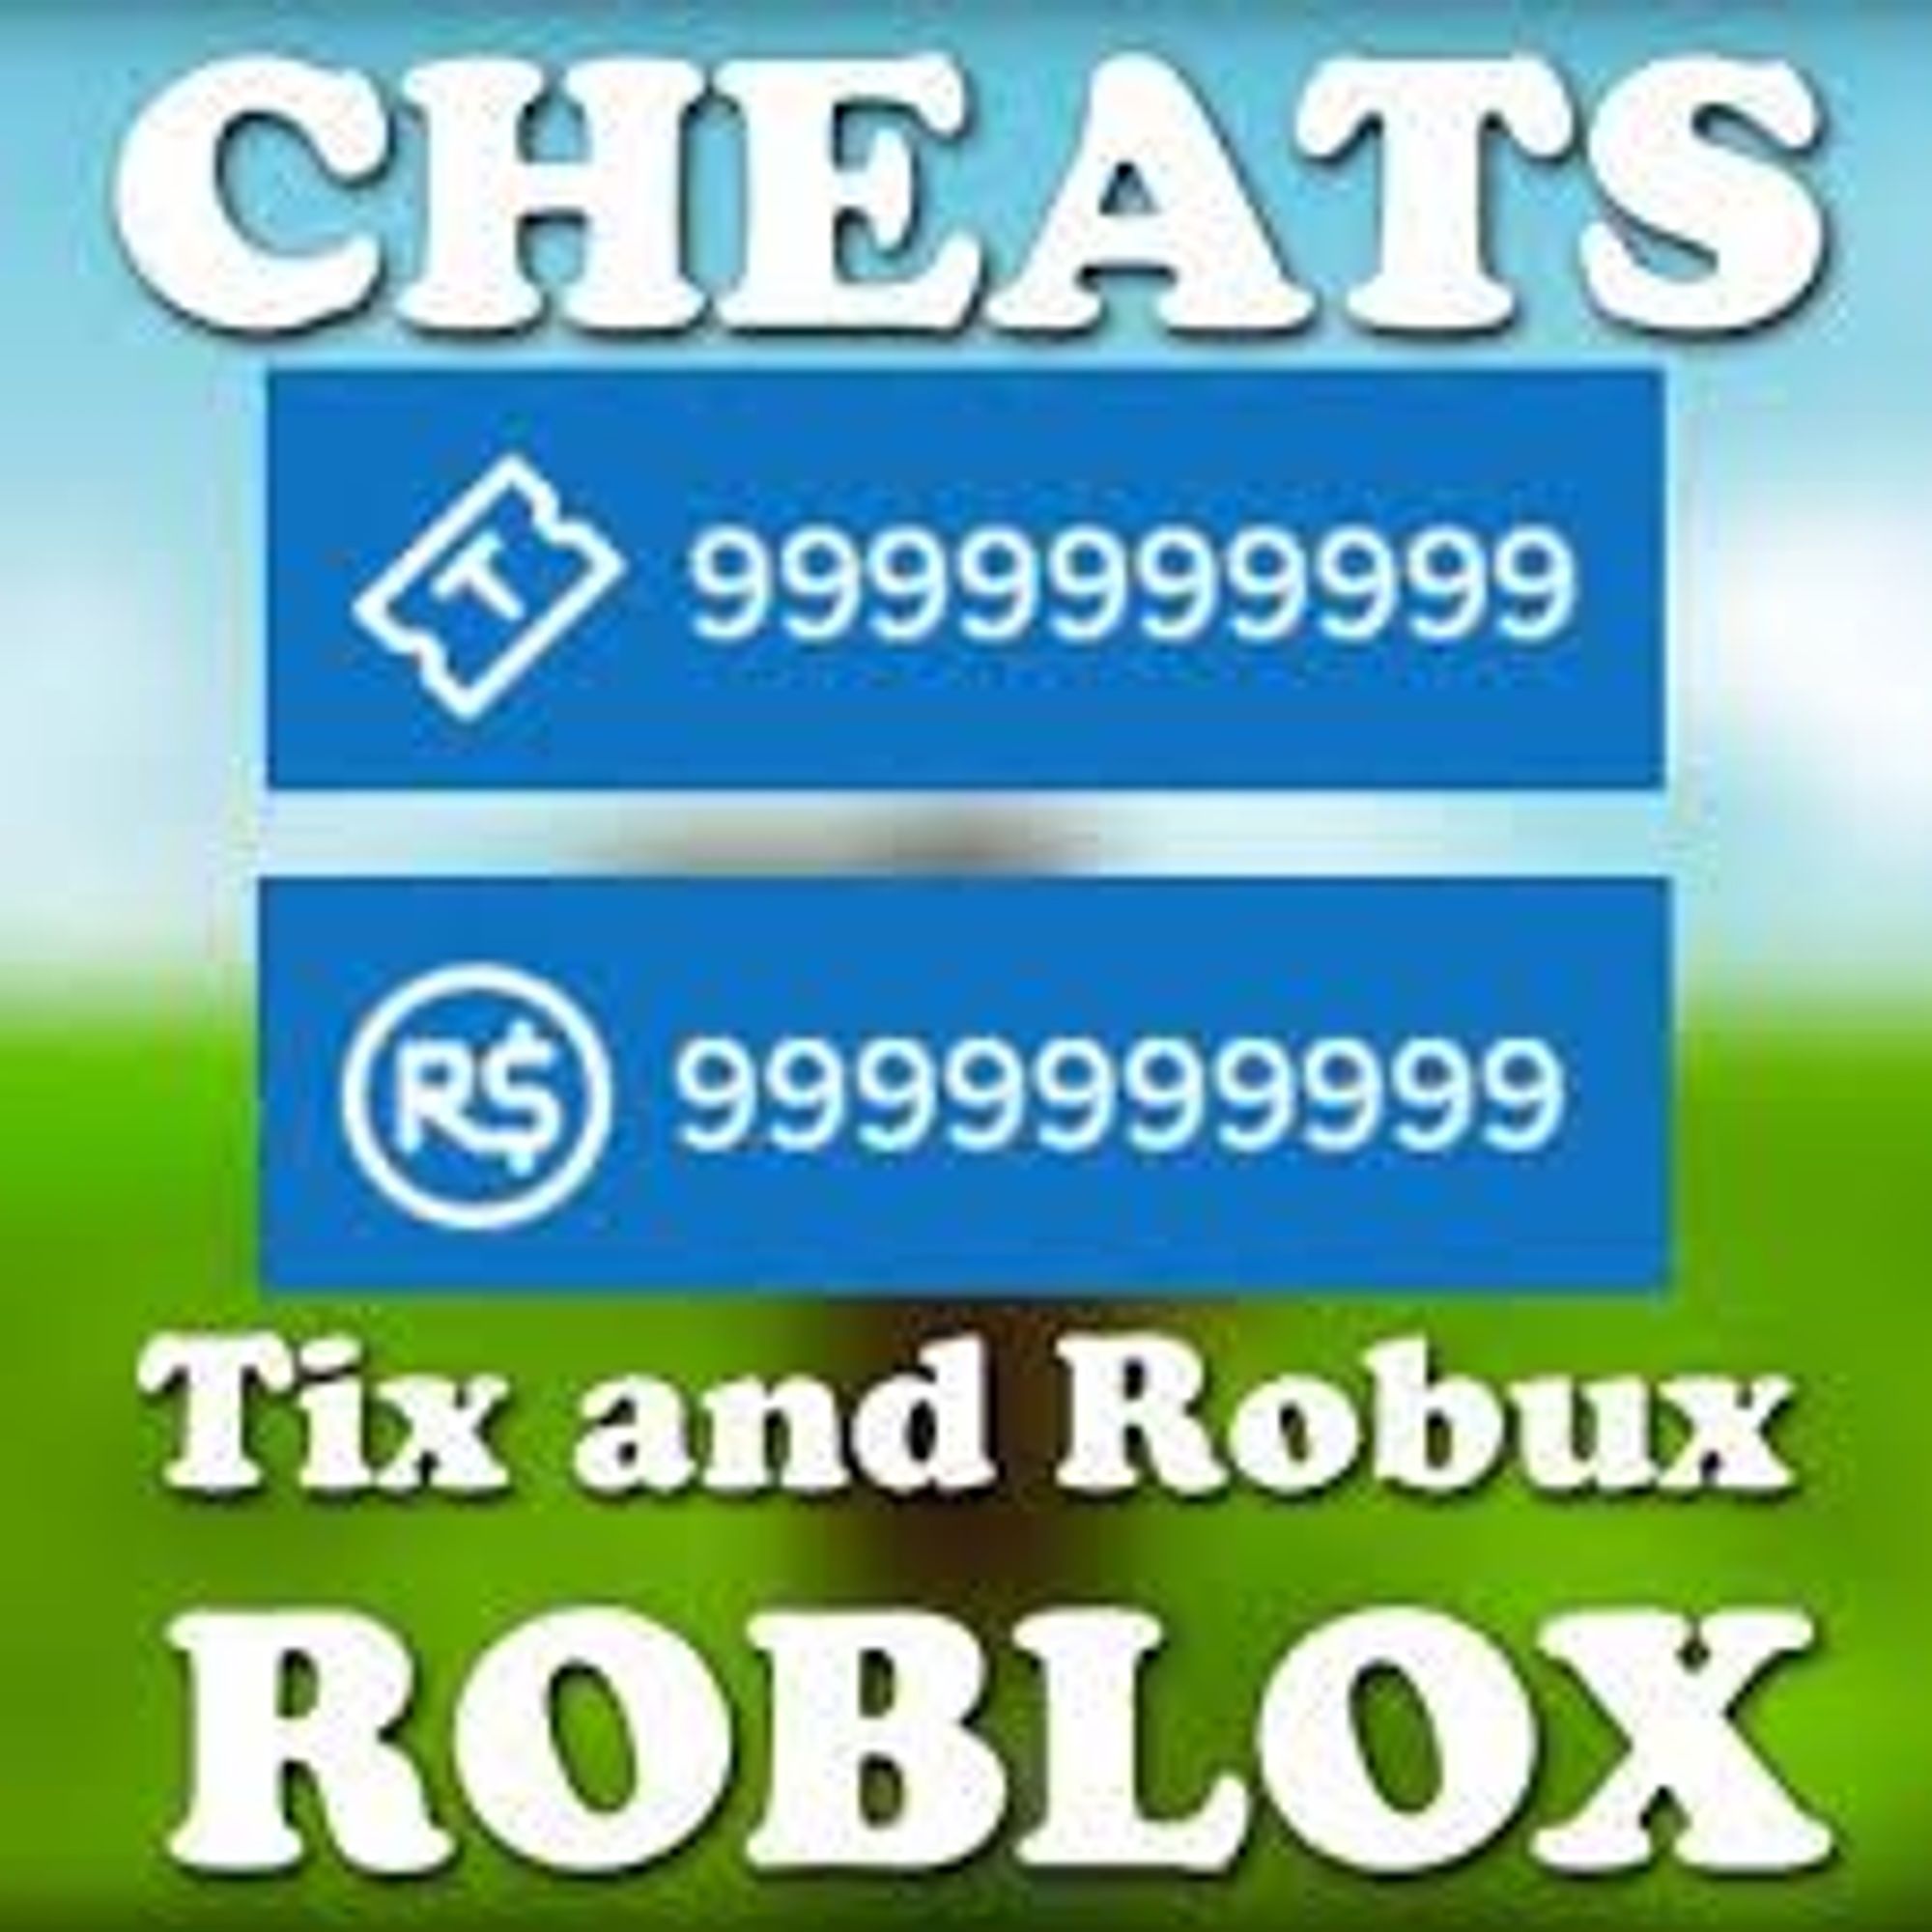 Latest Roblox Free Robux Hack Cheats 2020 - cheats in roblox money